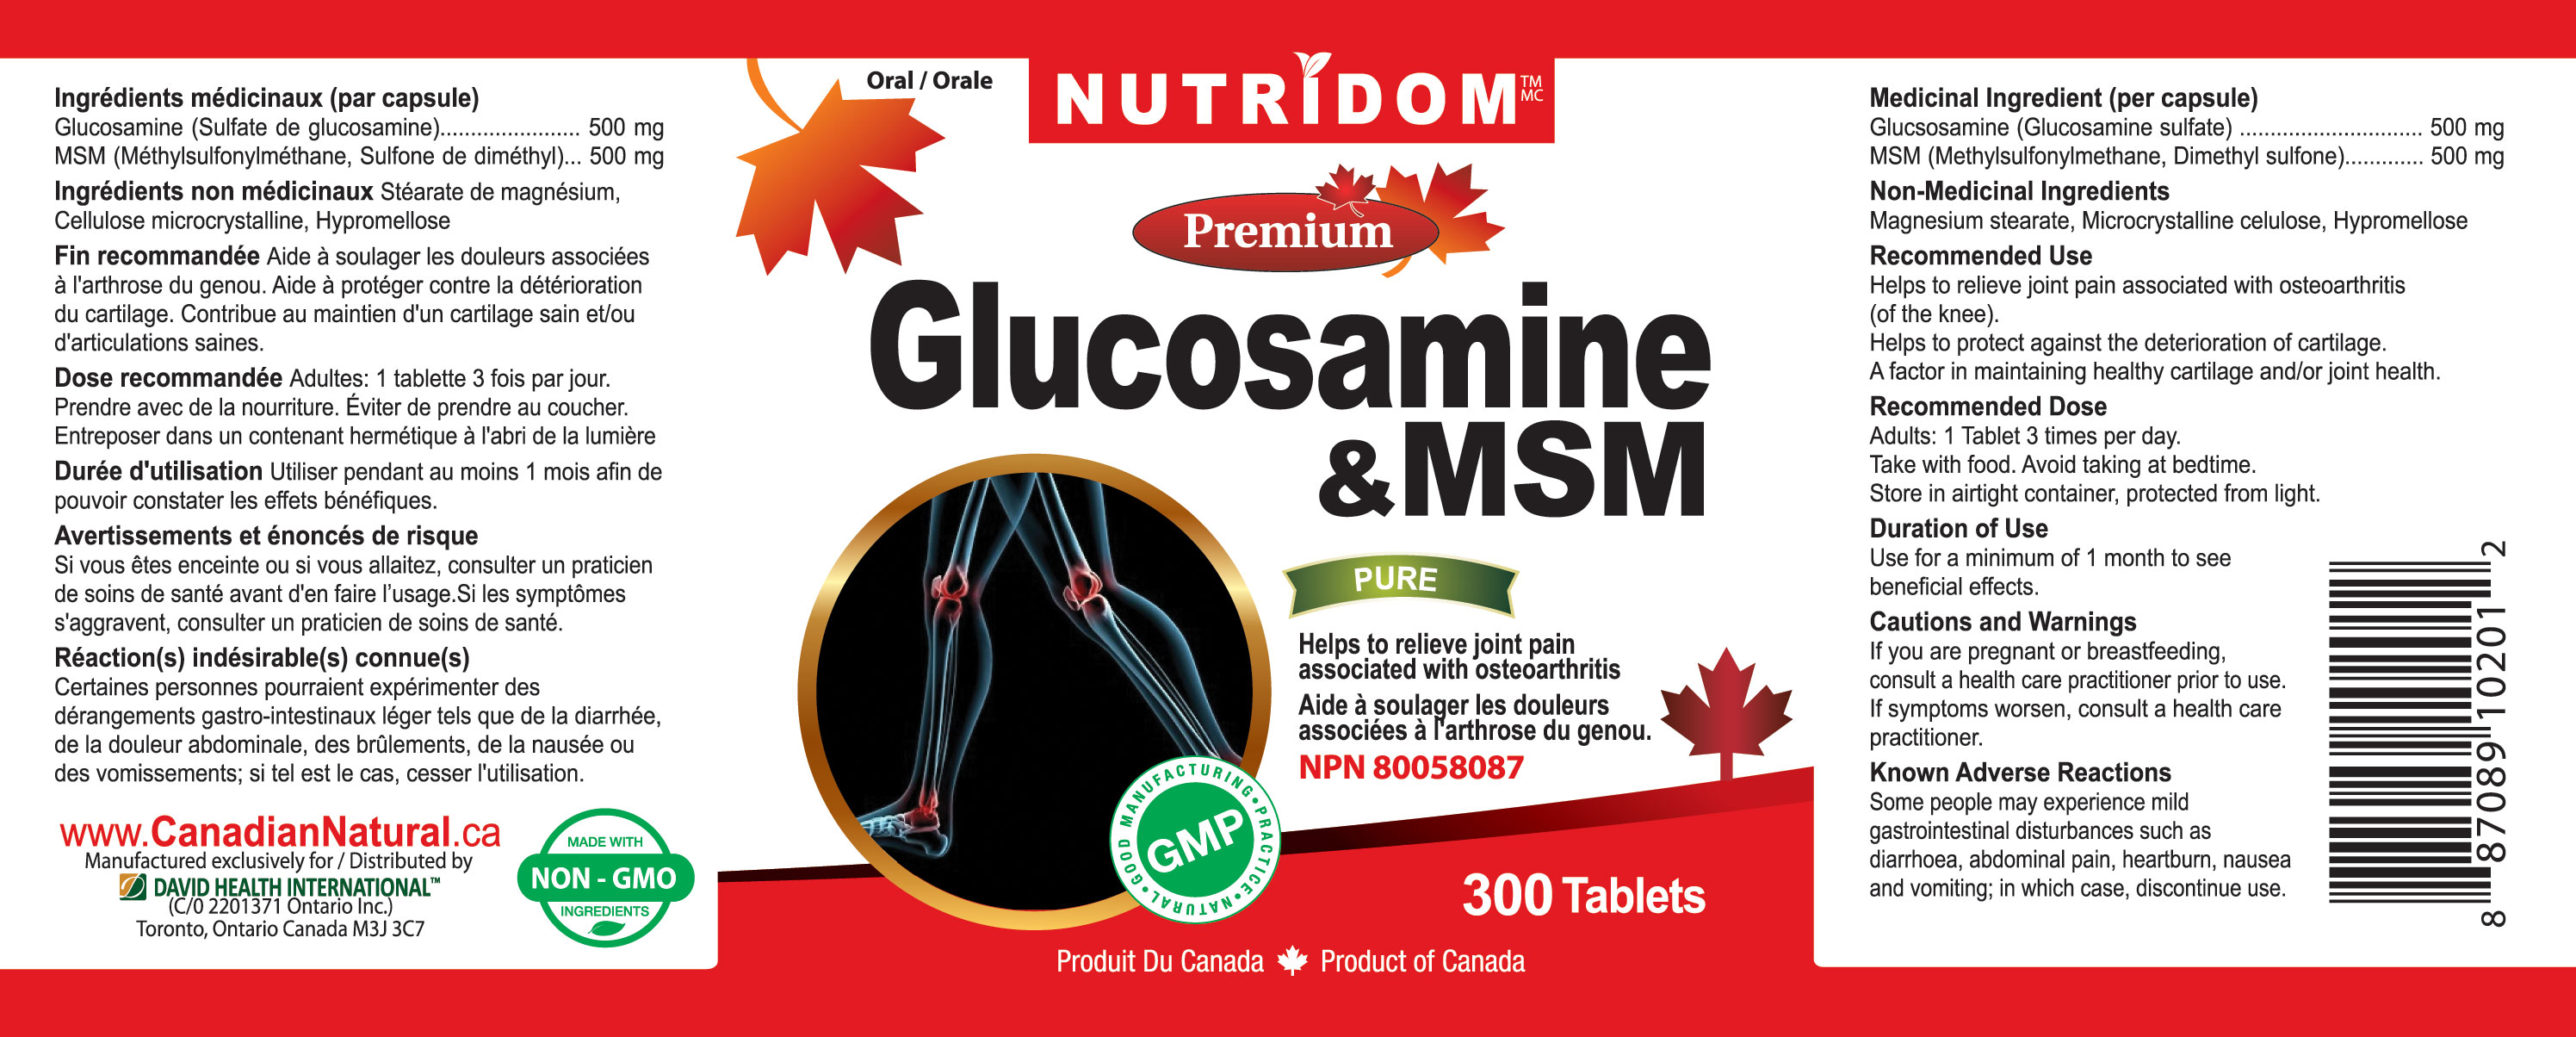 NUTRIDOM GLUCOSAMINE & MSM